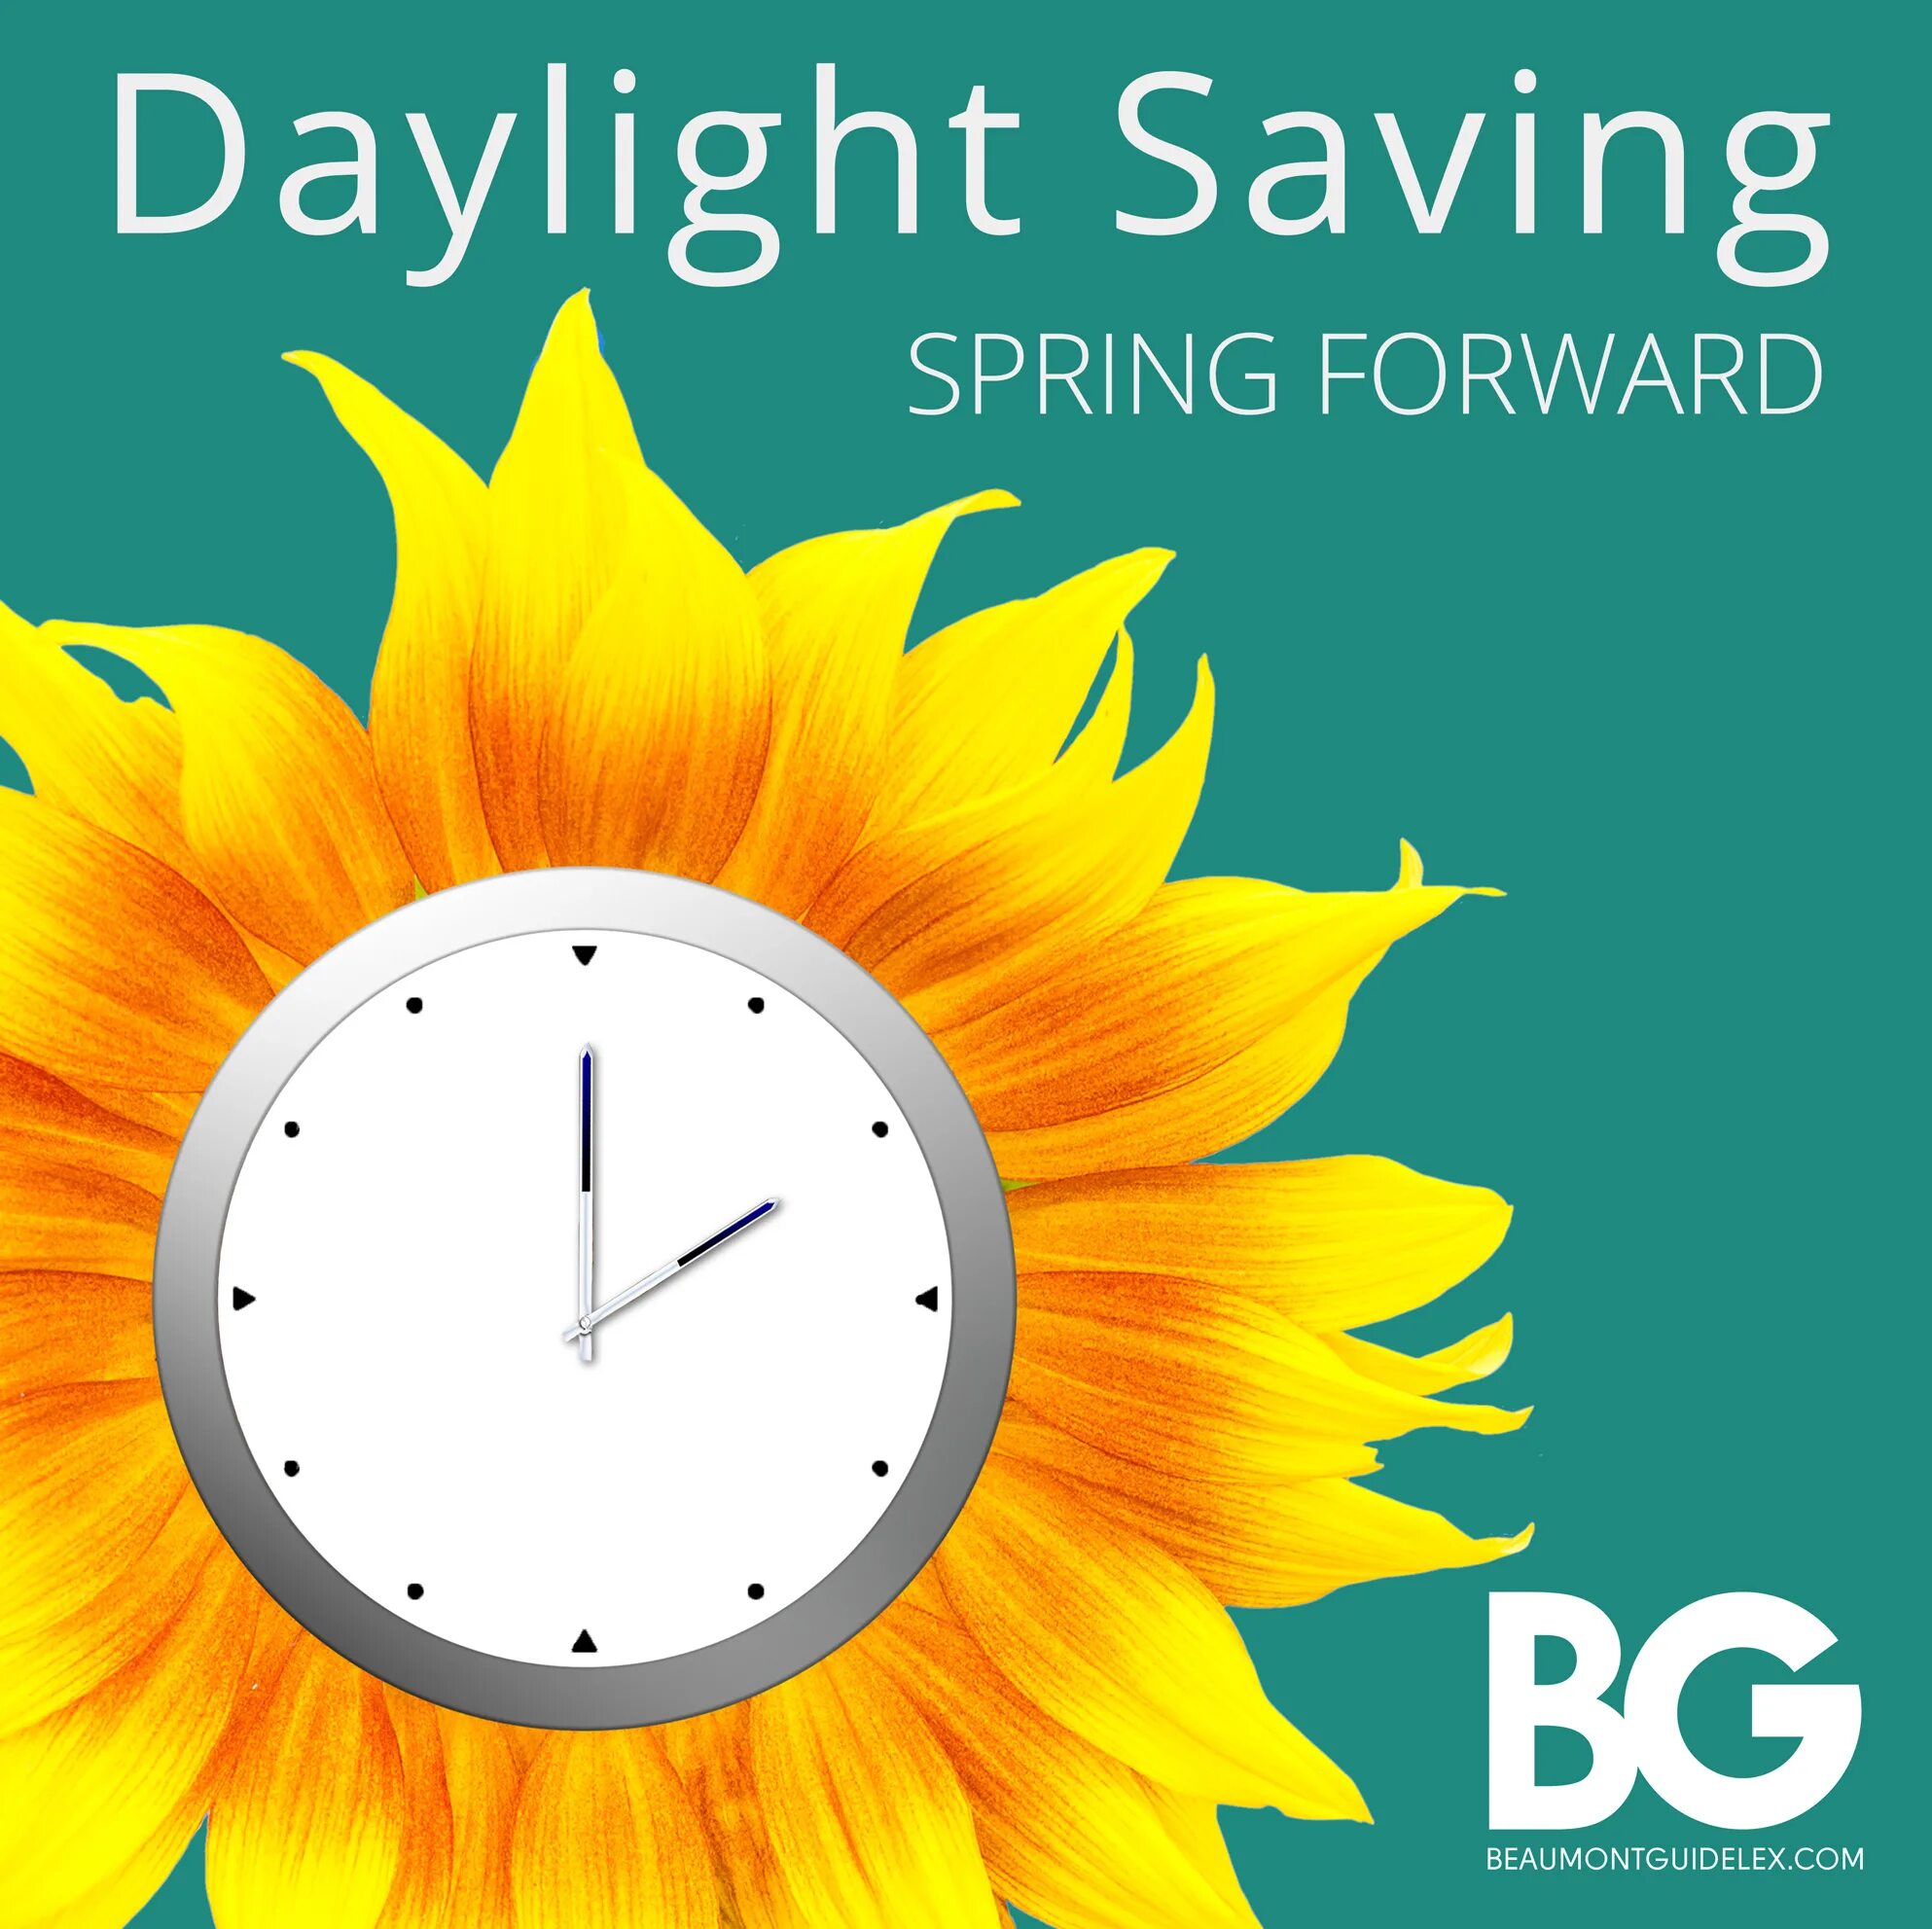 Daylight saving. Daylight saving time. Spring Daylight savings. Daylight saving Tome. 10 апреля 2020 день